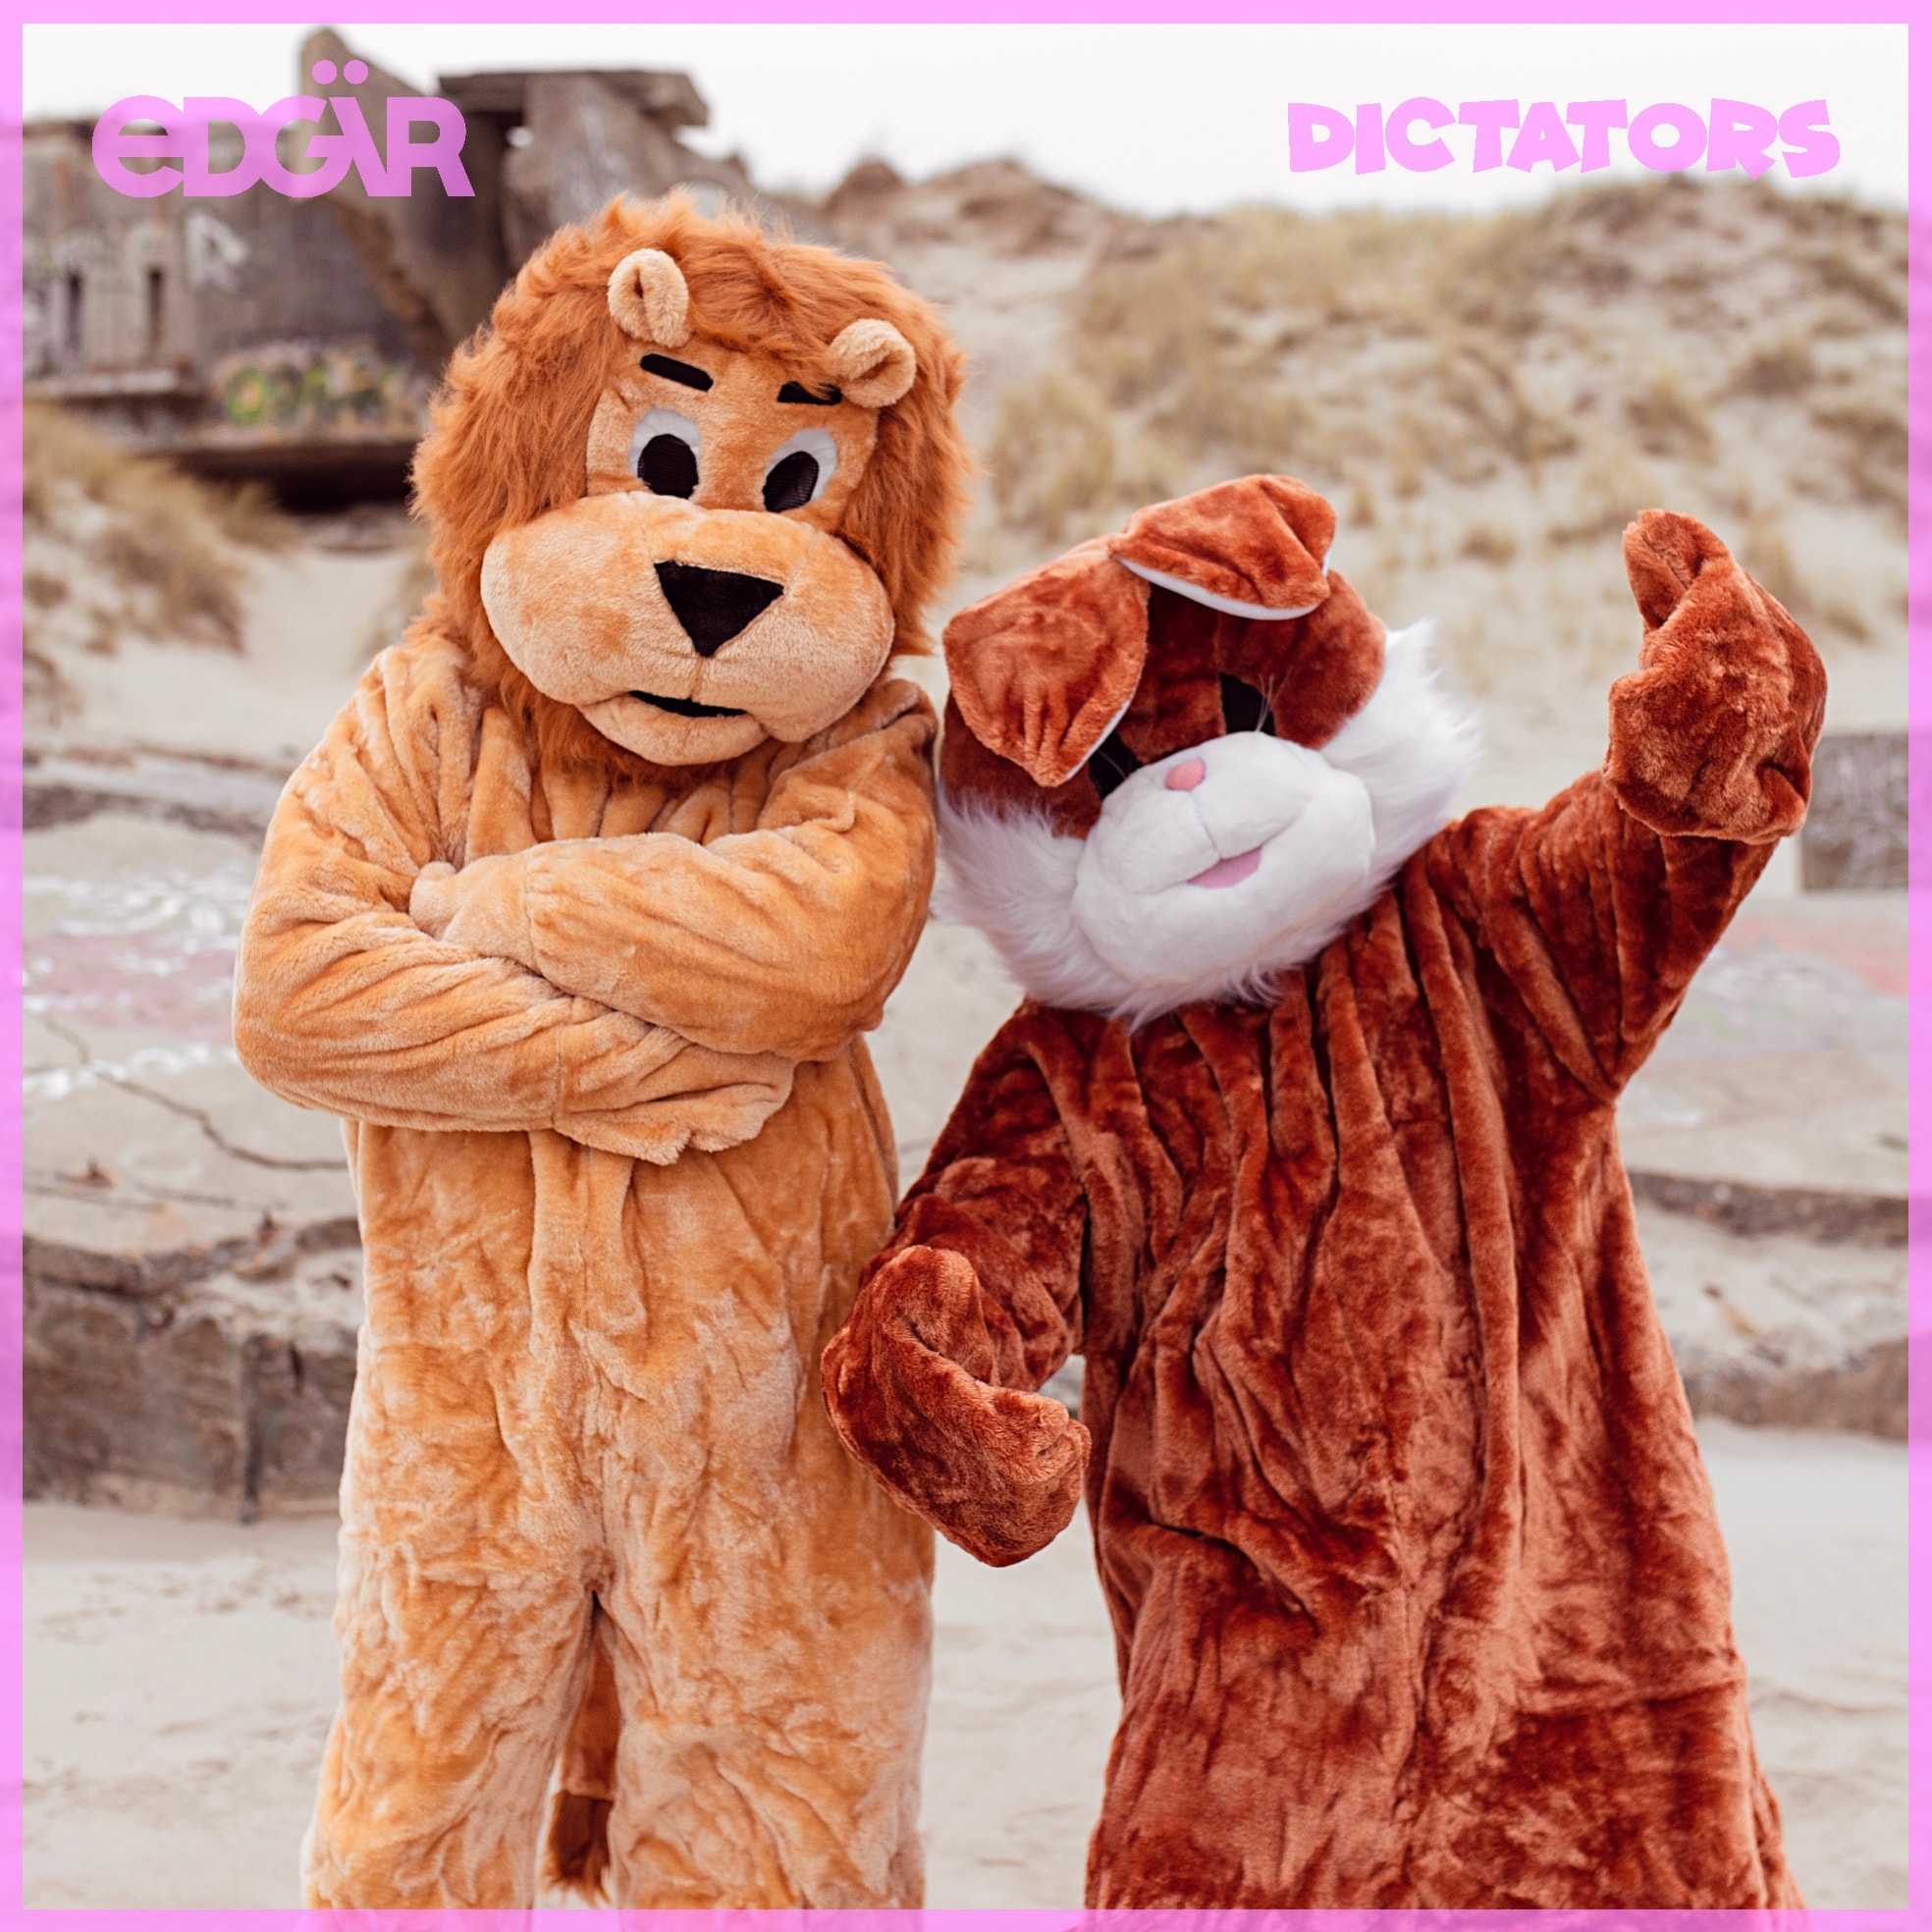 Edgär - Dictators (Official music video)